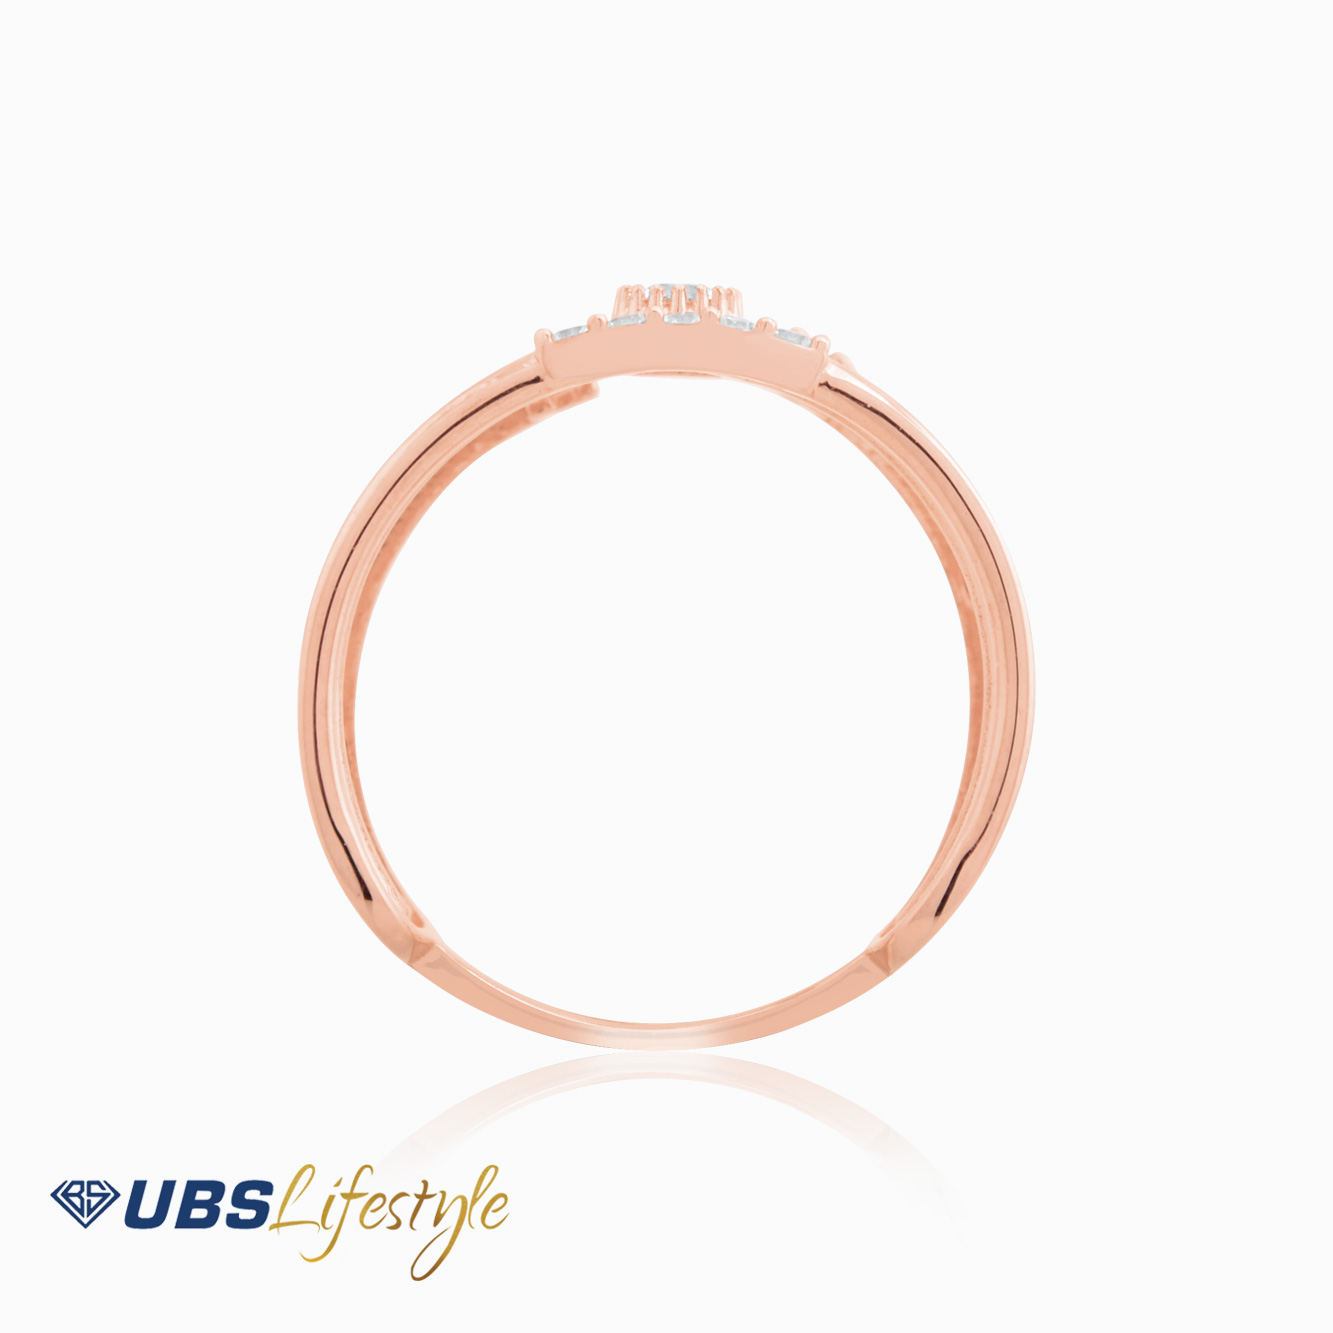 UBS Cincin Emas - Cc15551 - 17K